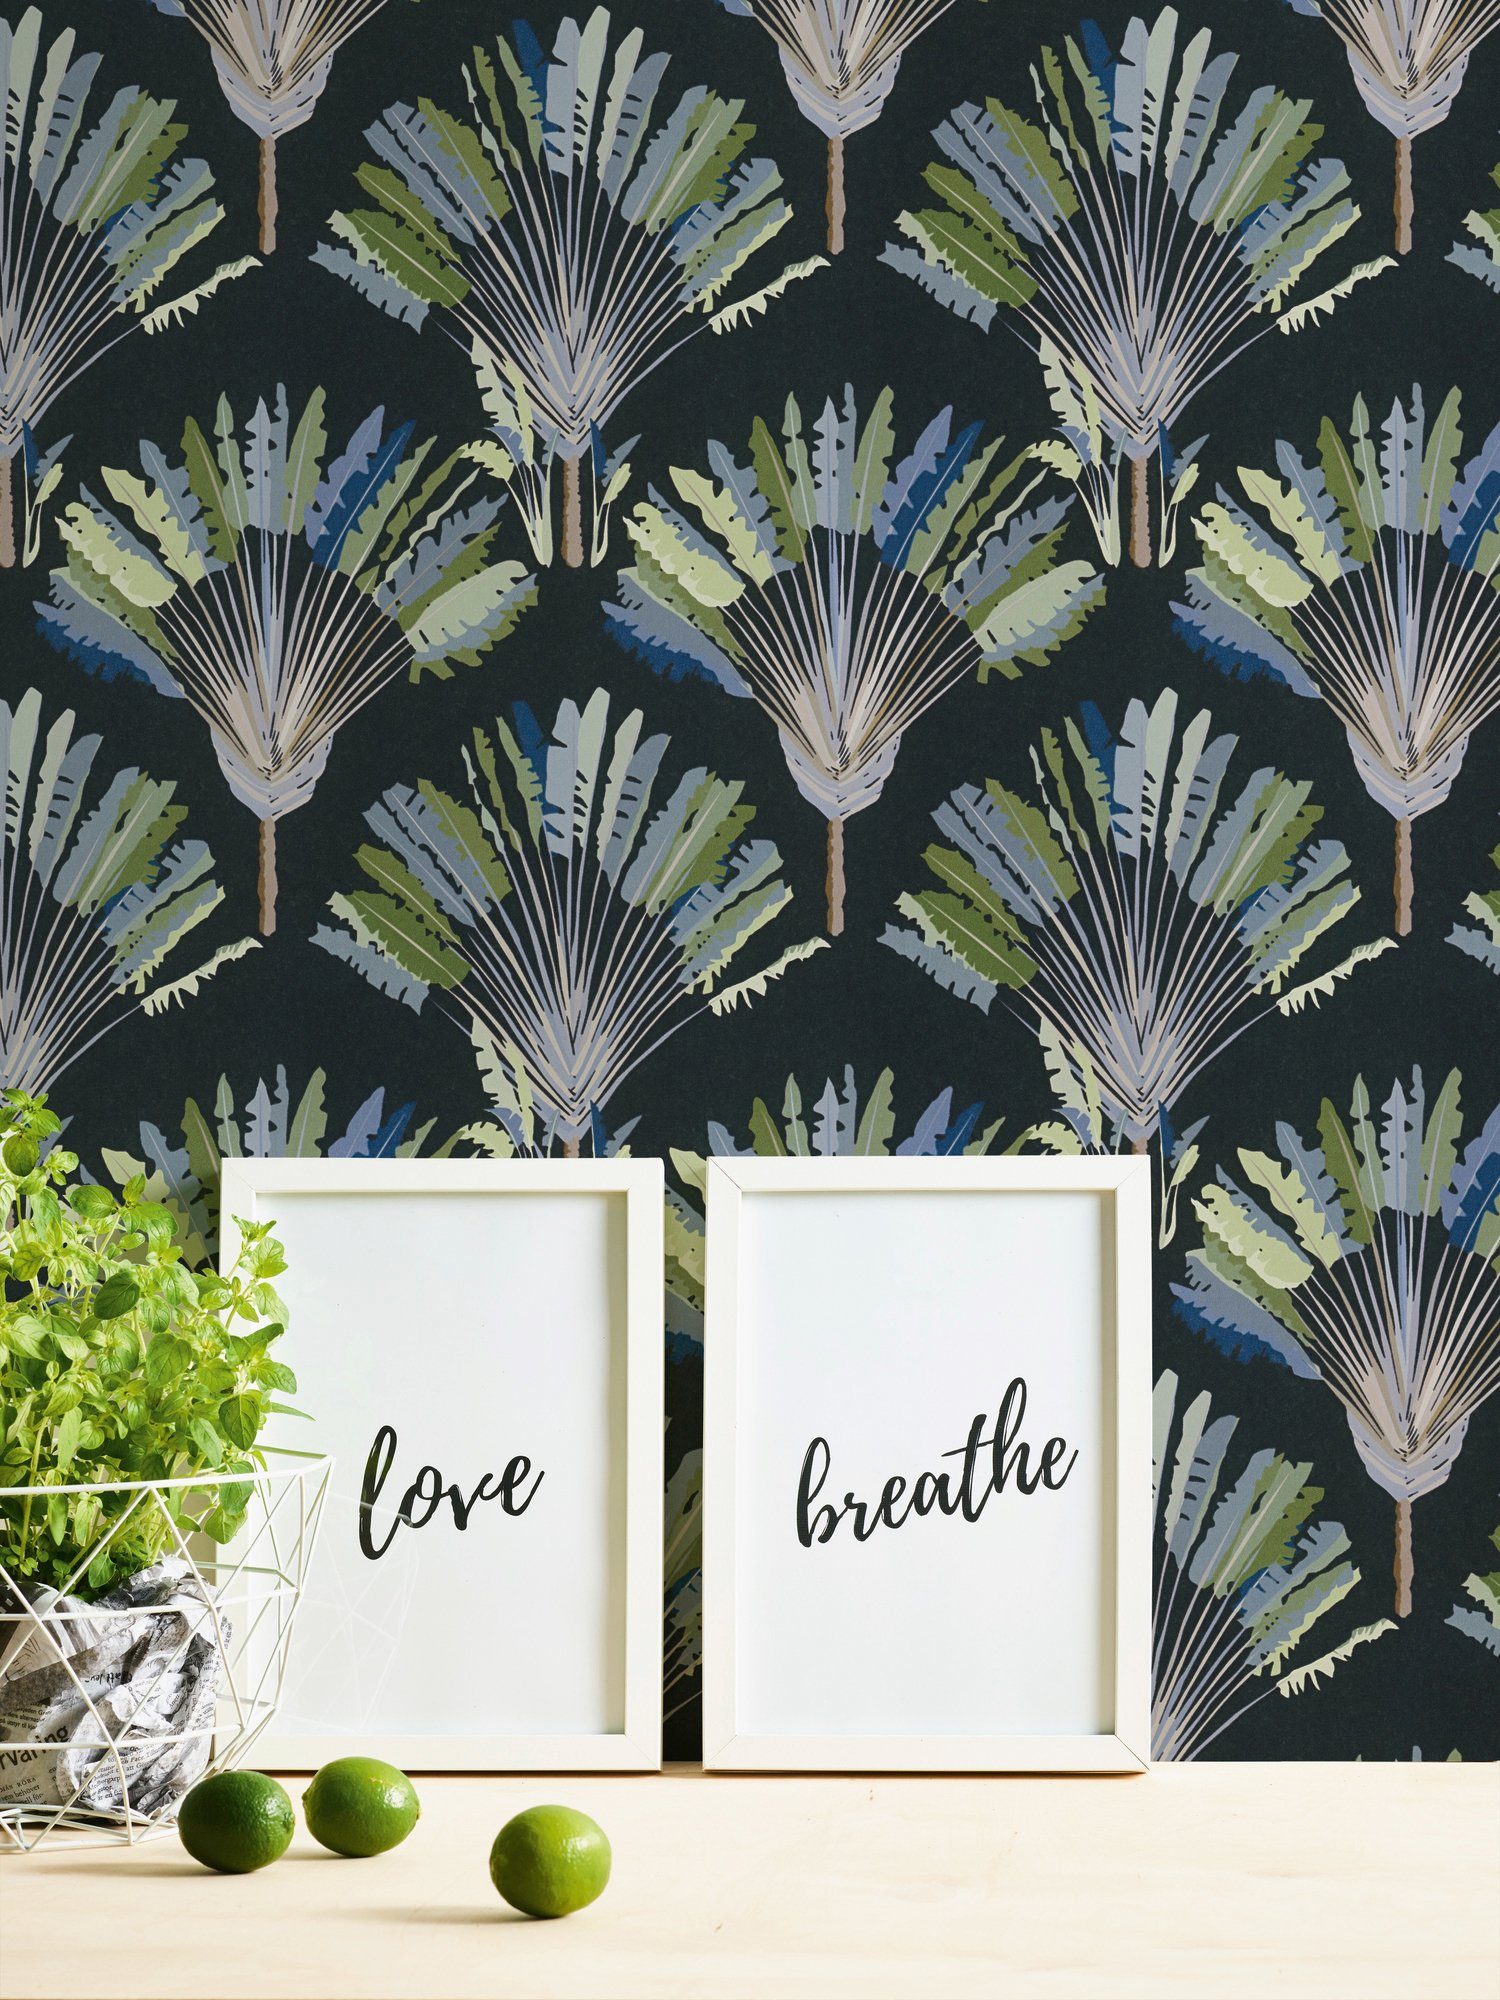 A.S. Création Architects Paper Palmentapete glatt, floral, Tapete Vliestapete tropisch, Dschungel botanisch, Federn Jungle Chic, grün/schwarz/blau